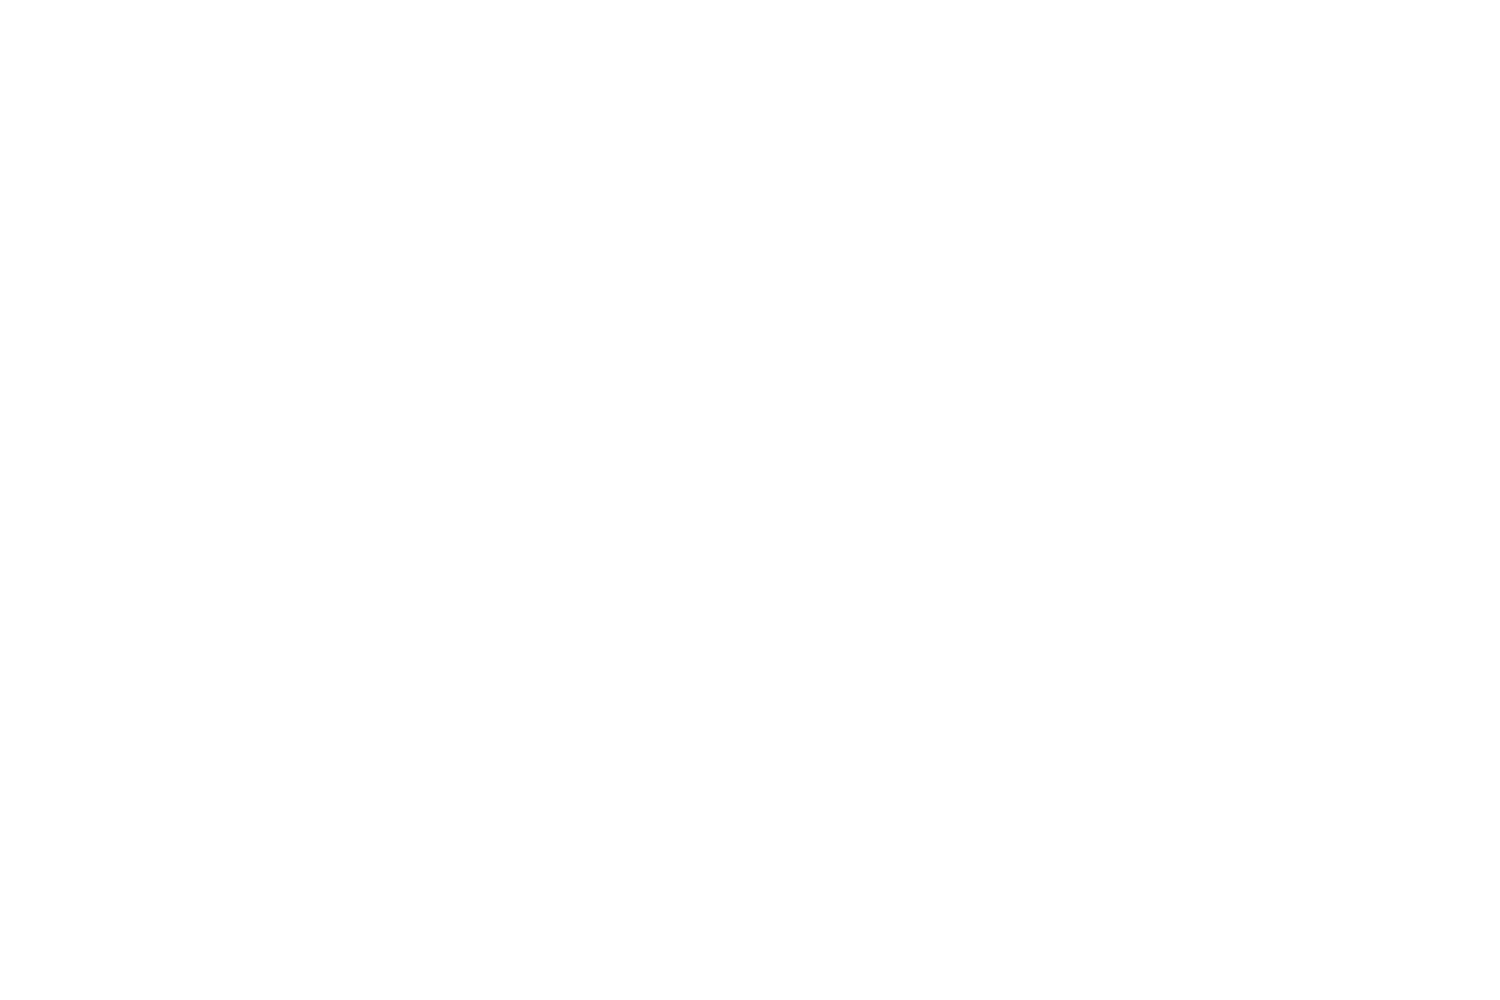 Mike Durbin Photography